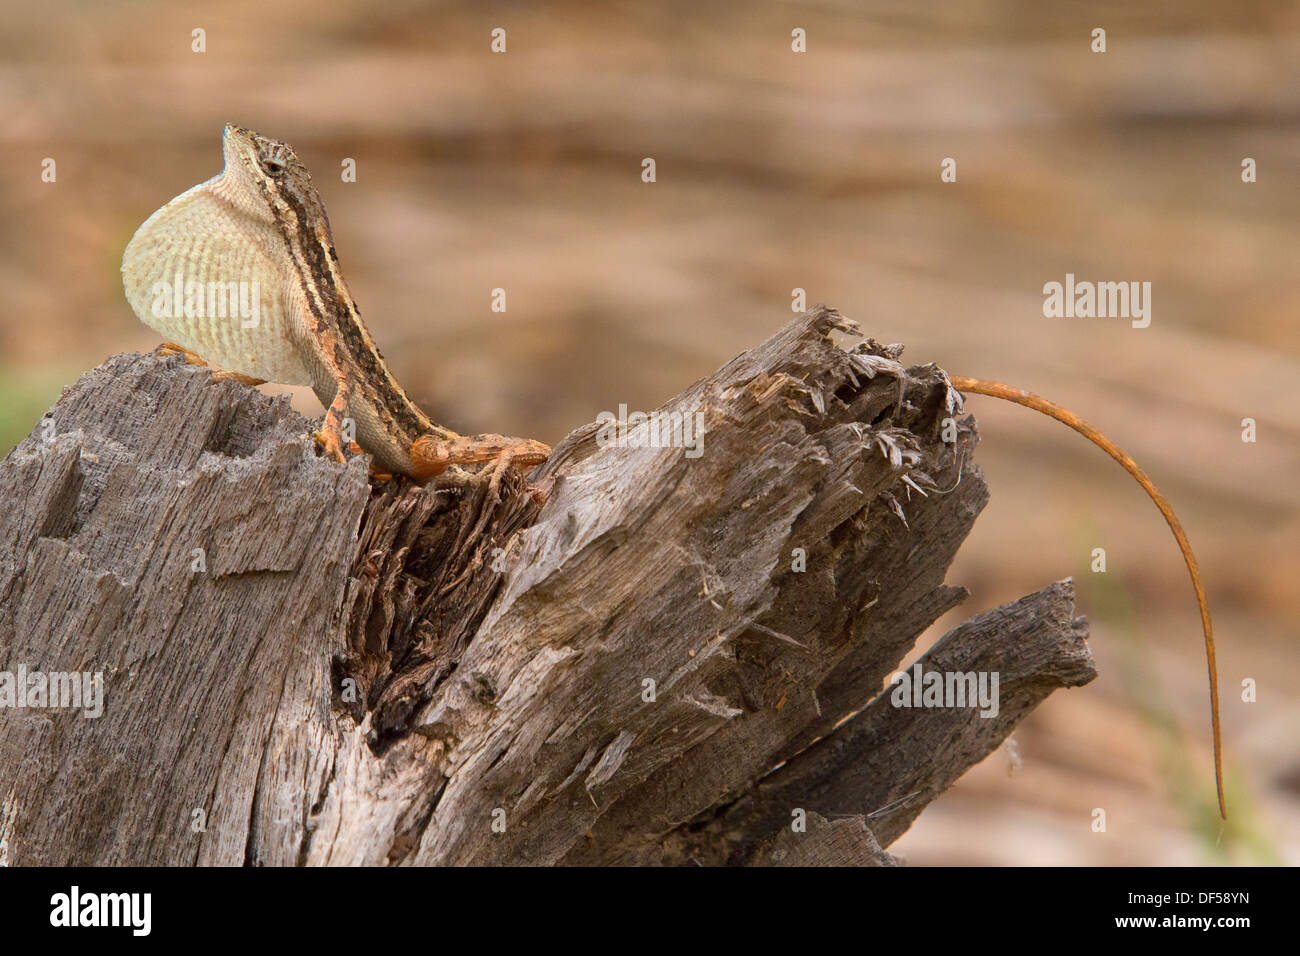 fan-throated lizard (Sitana ponticeriana) displaying Stock Photo